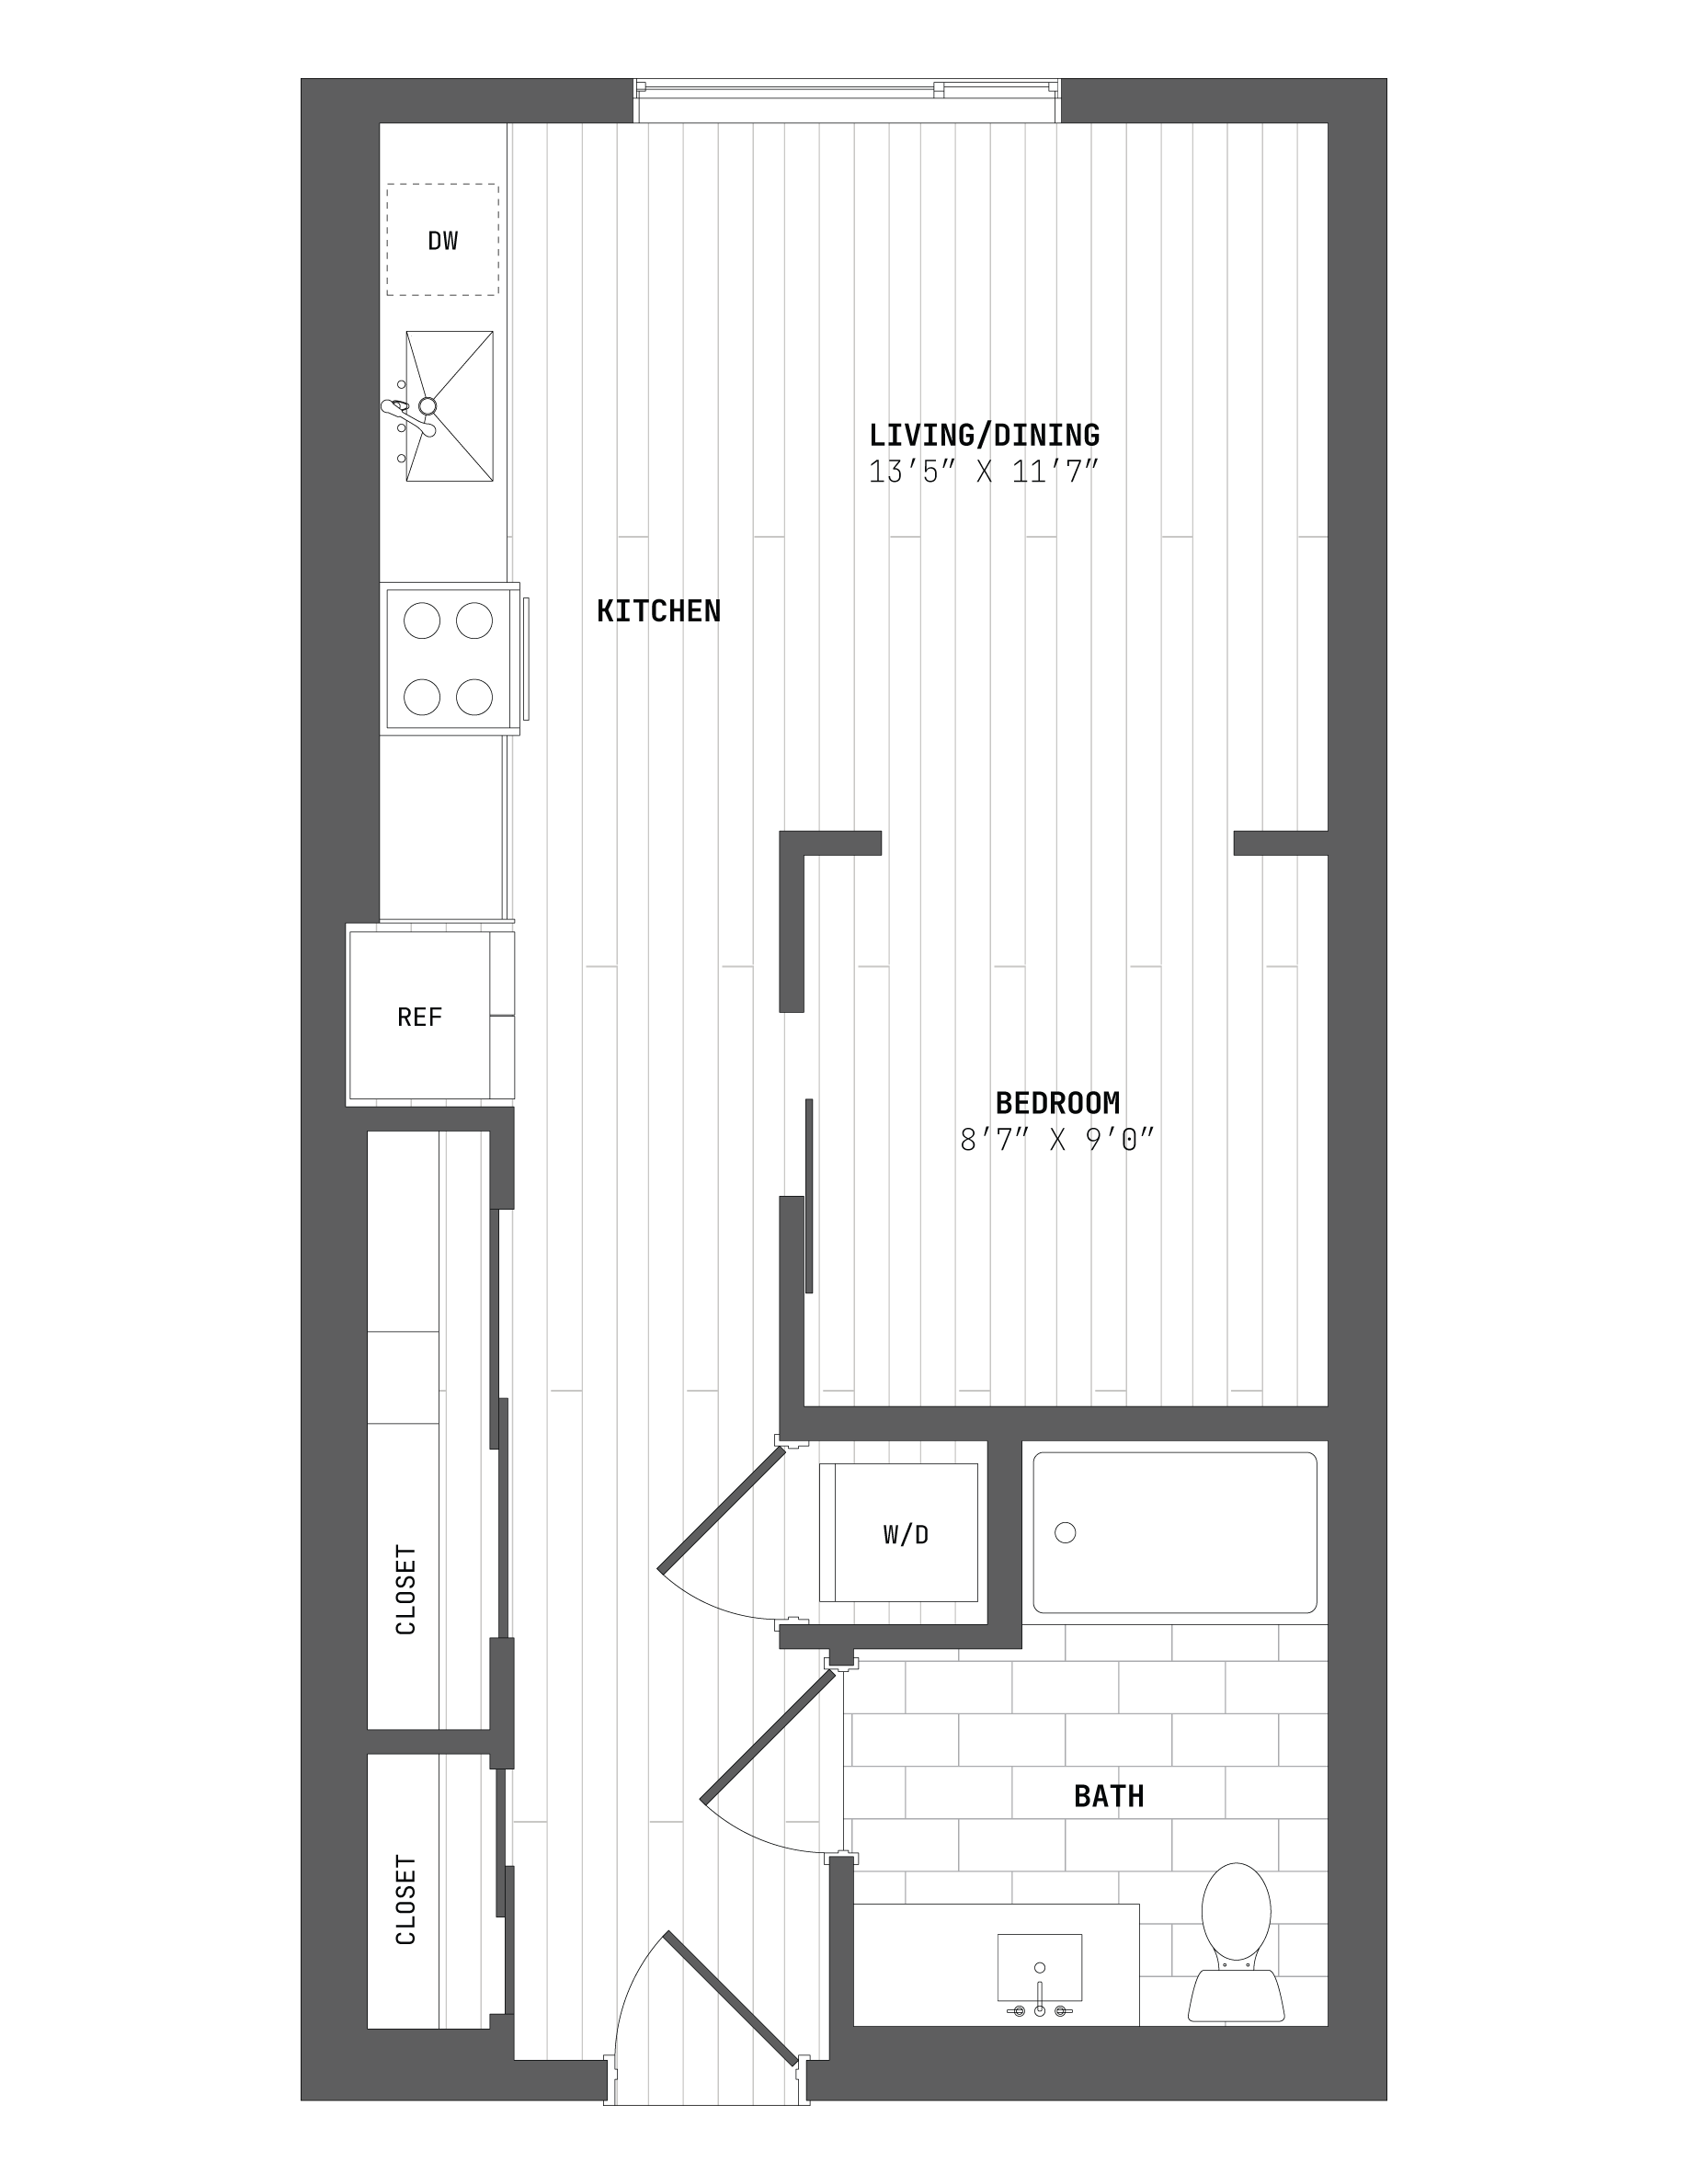 Apartment 4785270 floorplan